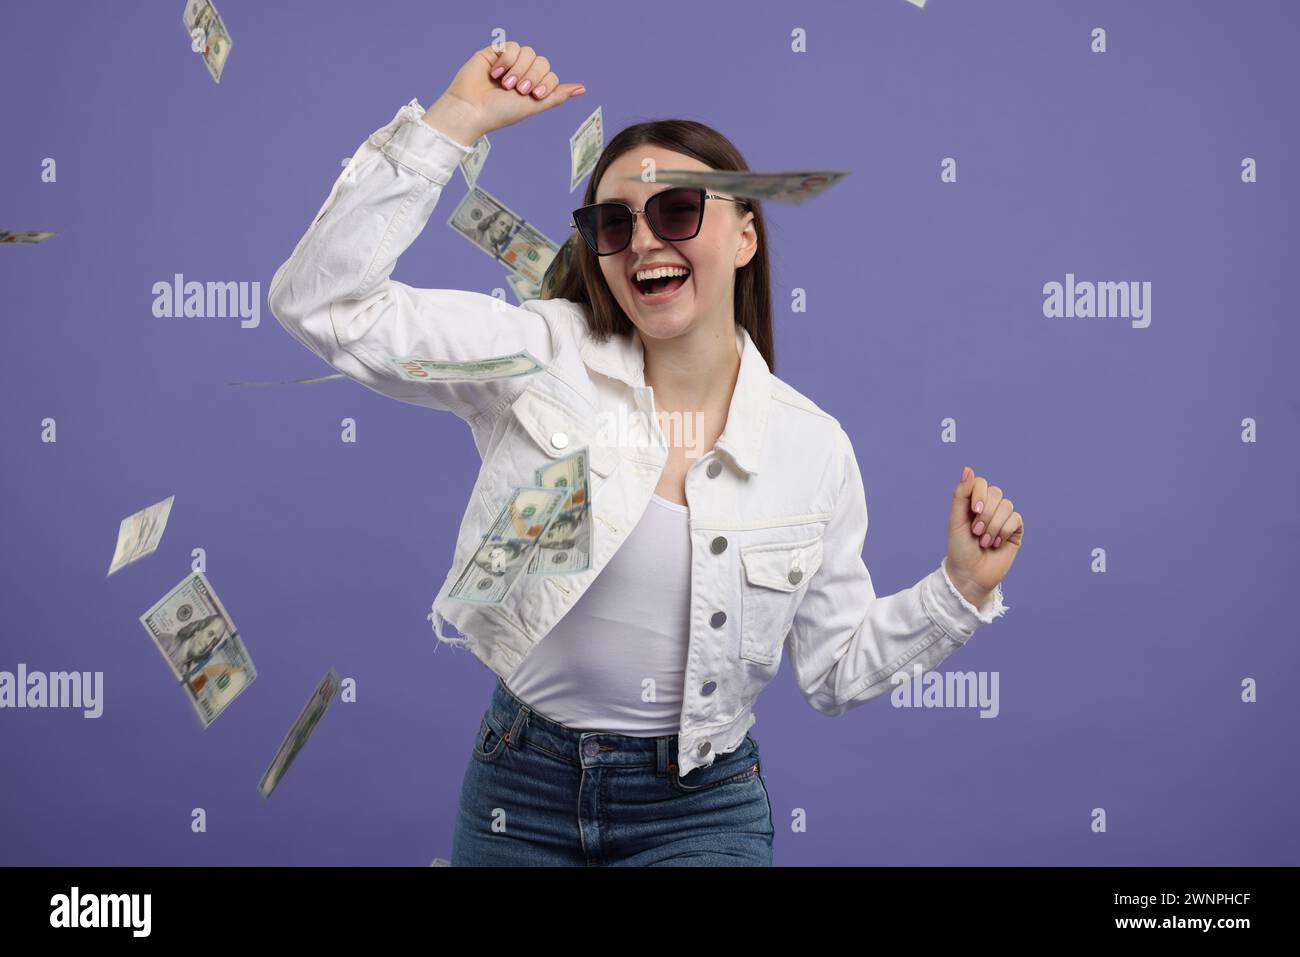 Happy woman under money shower on purple background Stock Photo